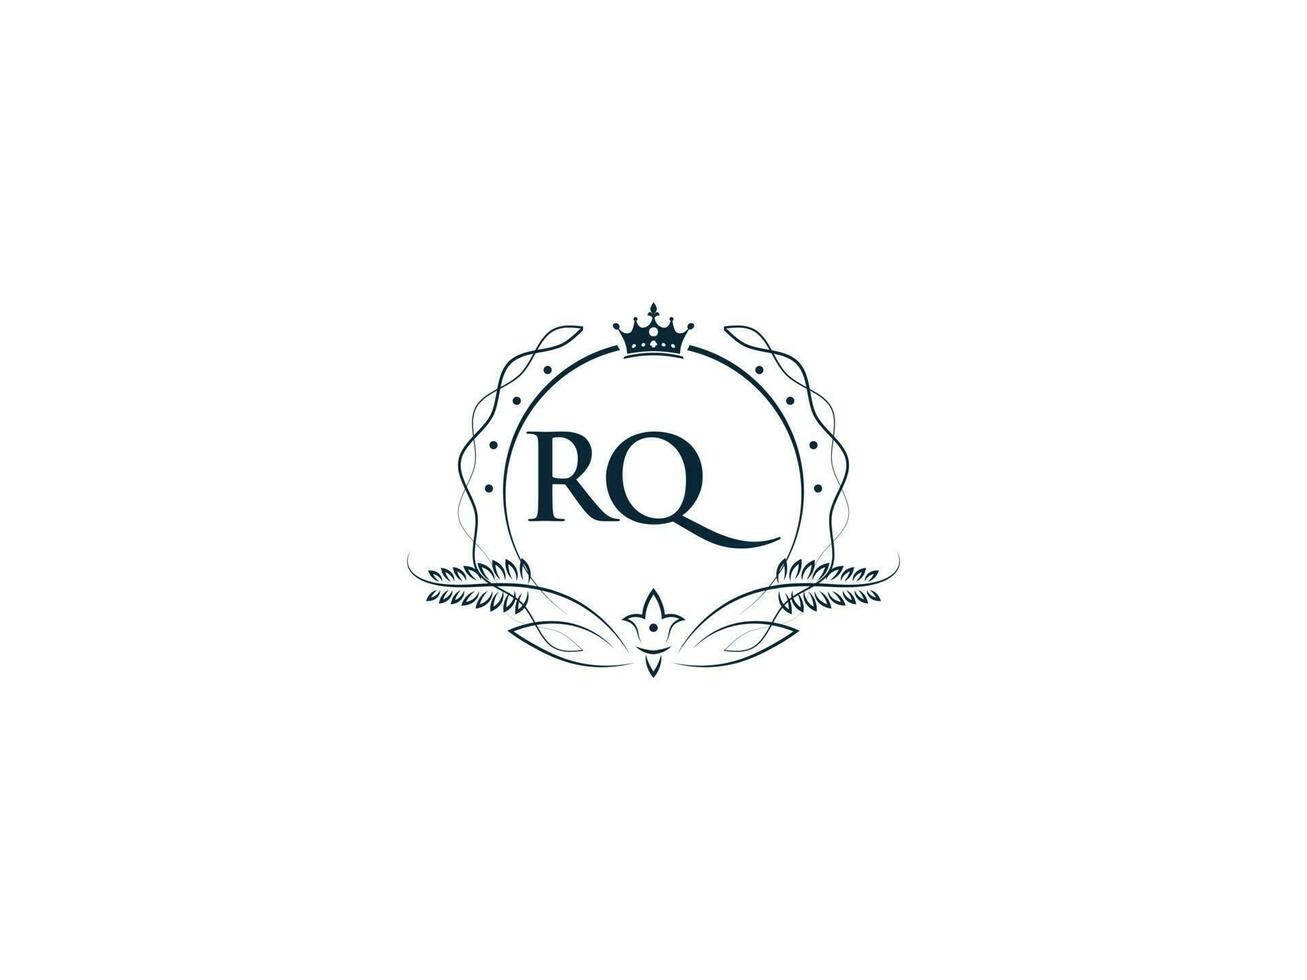 Royal couronne rq logo icône, féminin luxe rq qr logo lettre vecteur